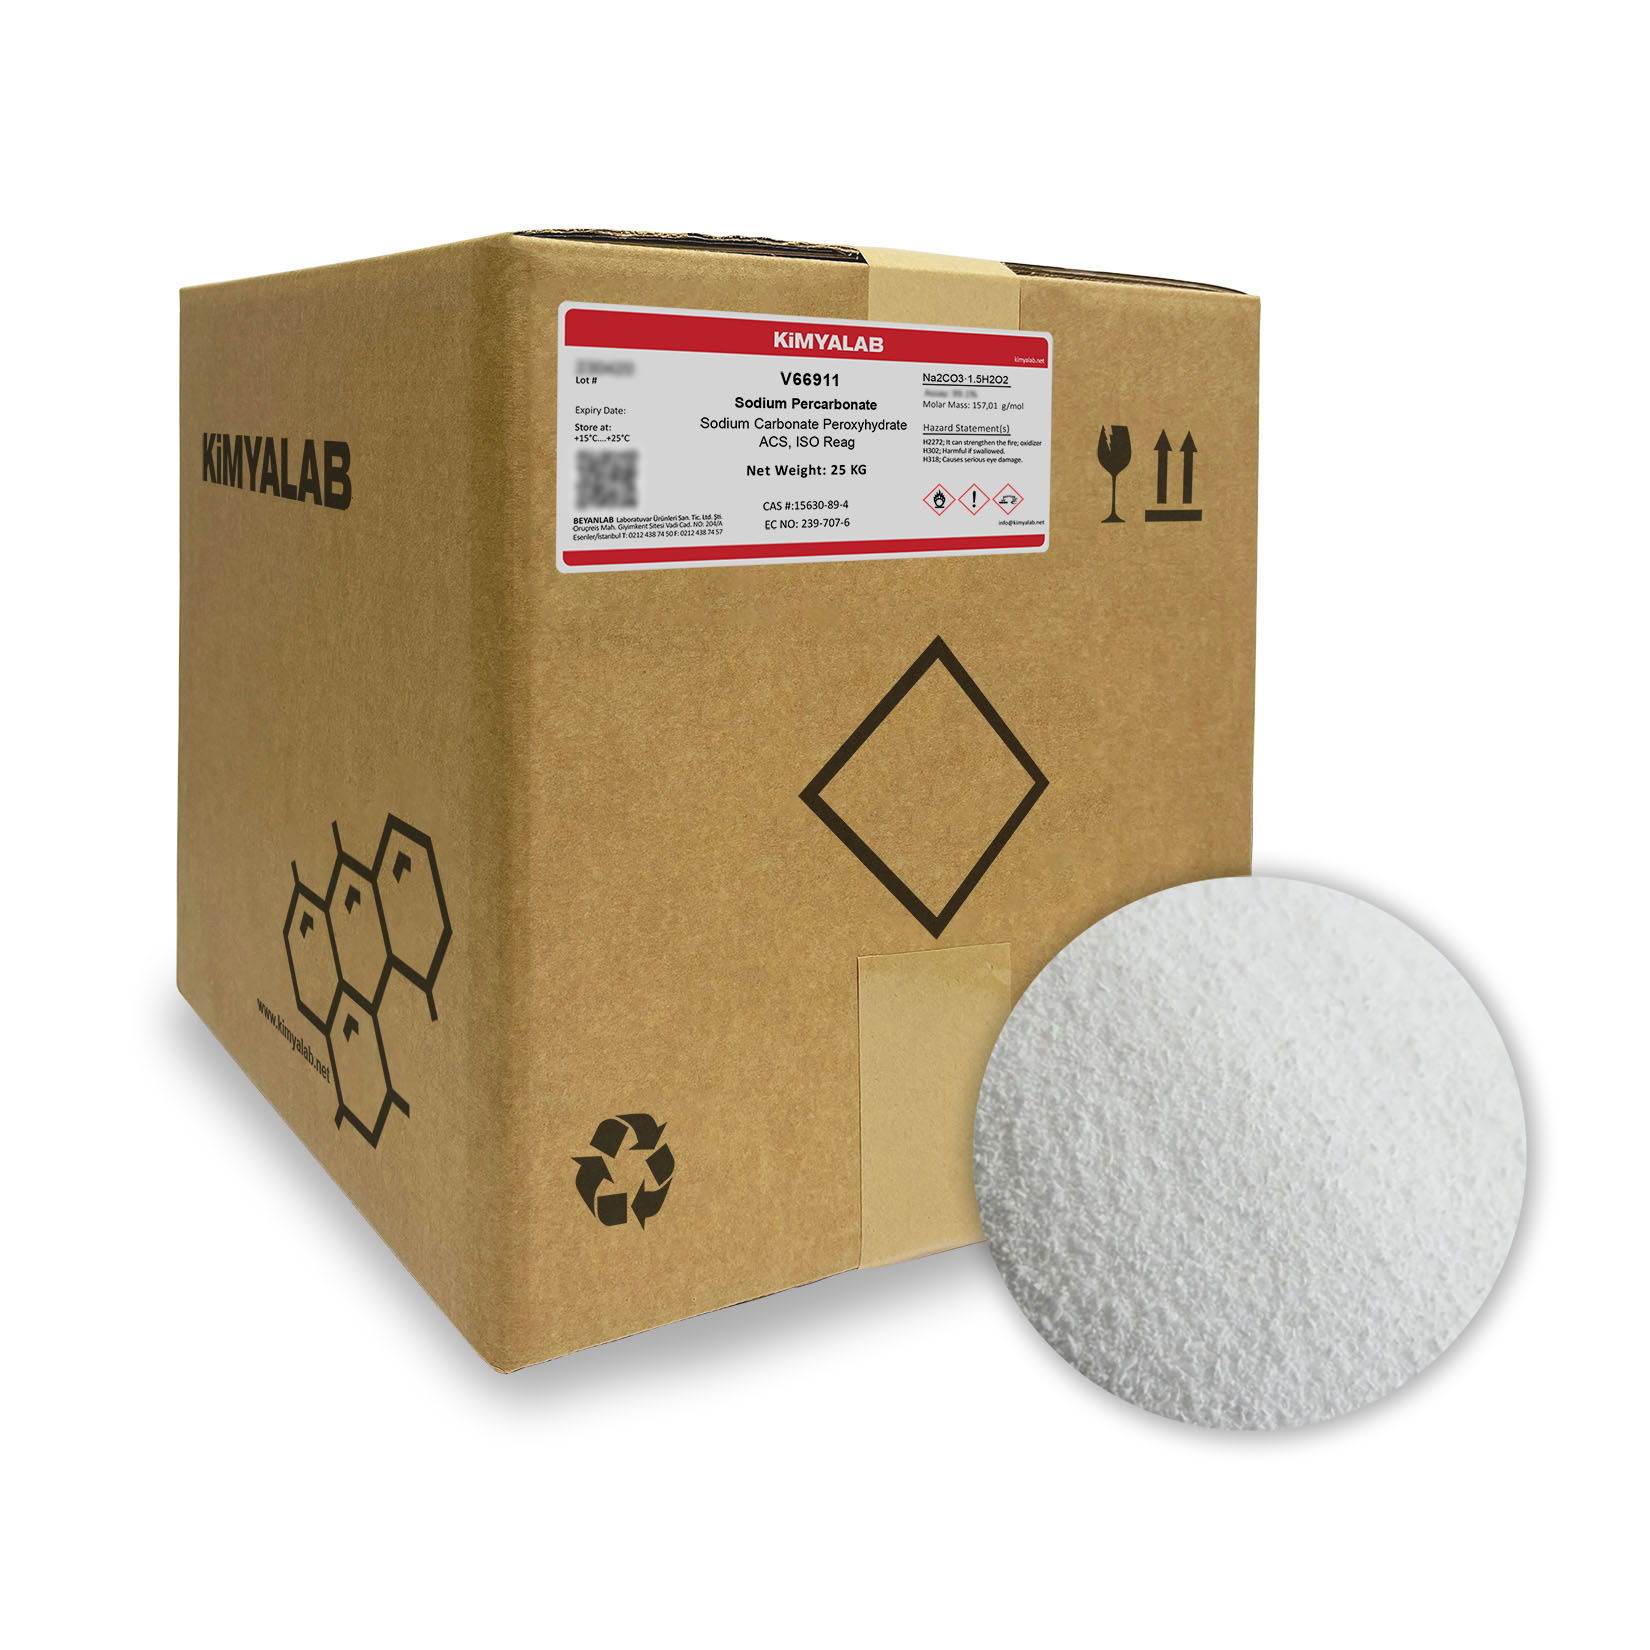 Kimyalab Sodyum Perkarbonat - Sodium Percarbonate 25 Kg-Koli Toptan